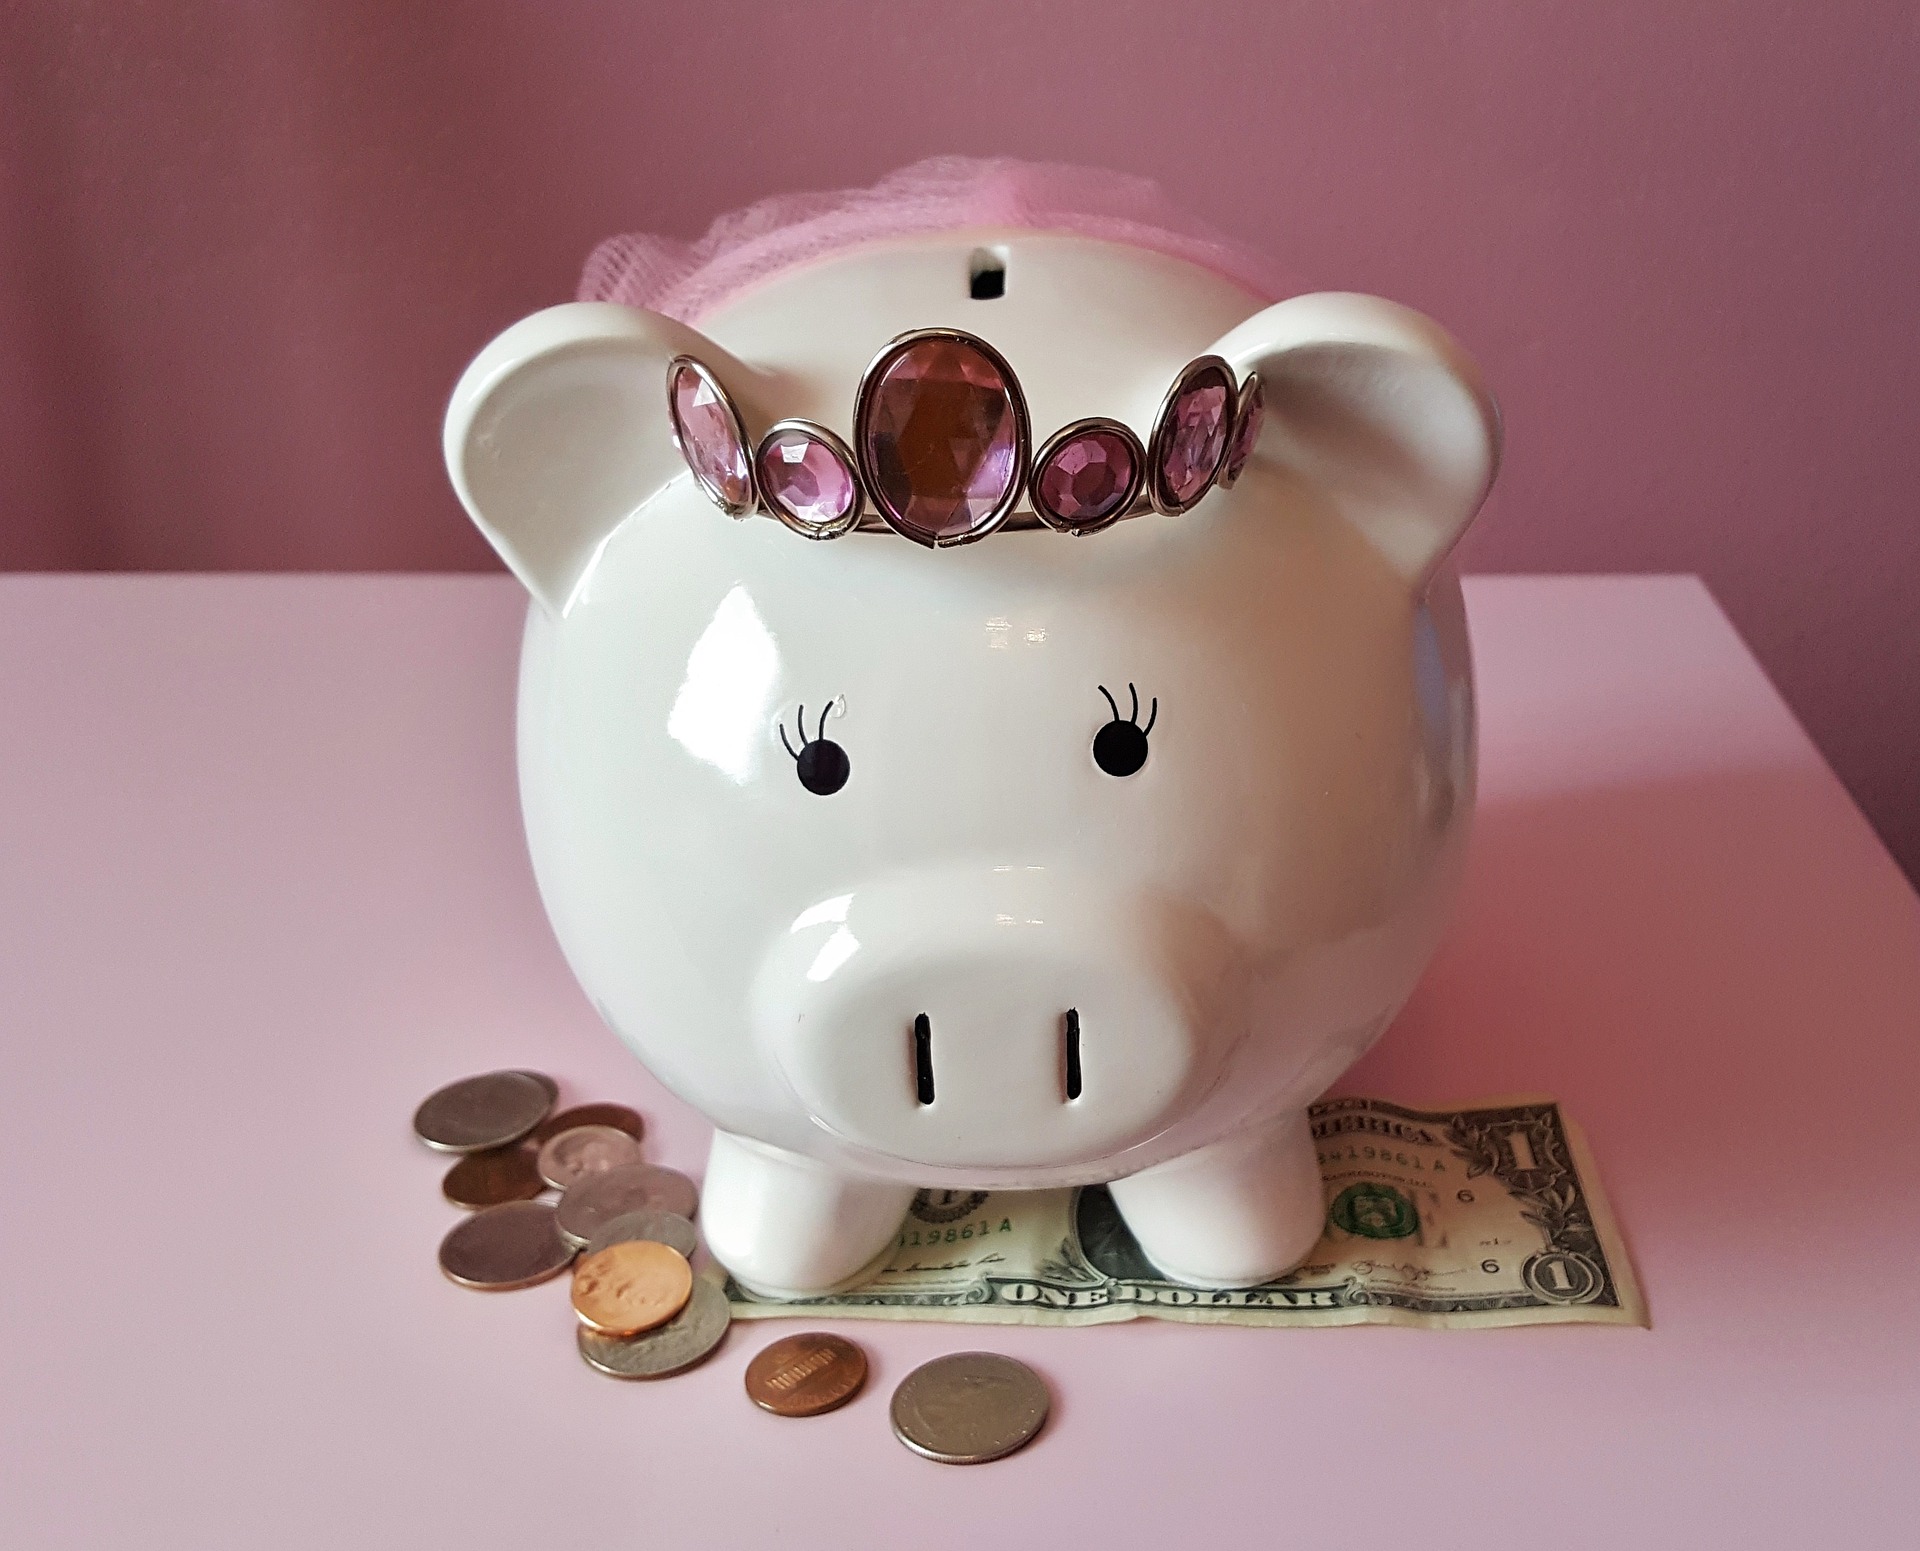 5 Tips on Teaching Kids to Save Money